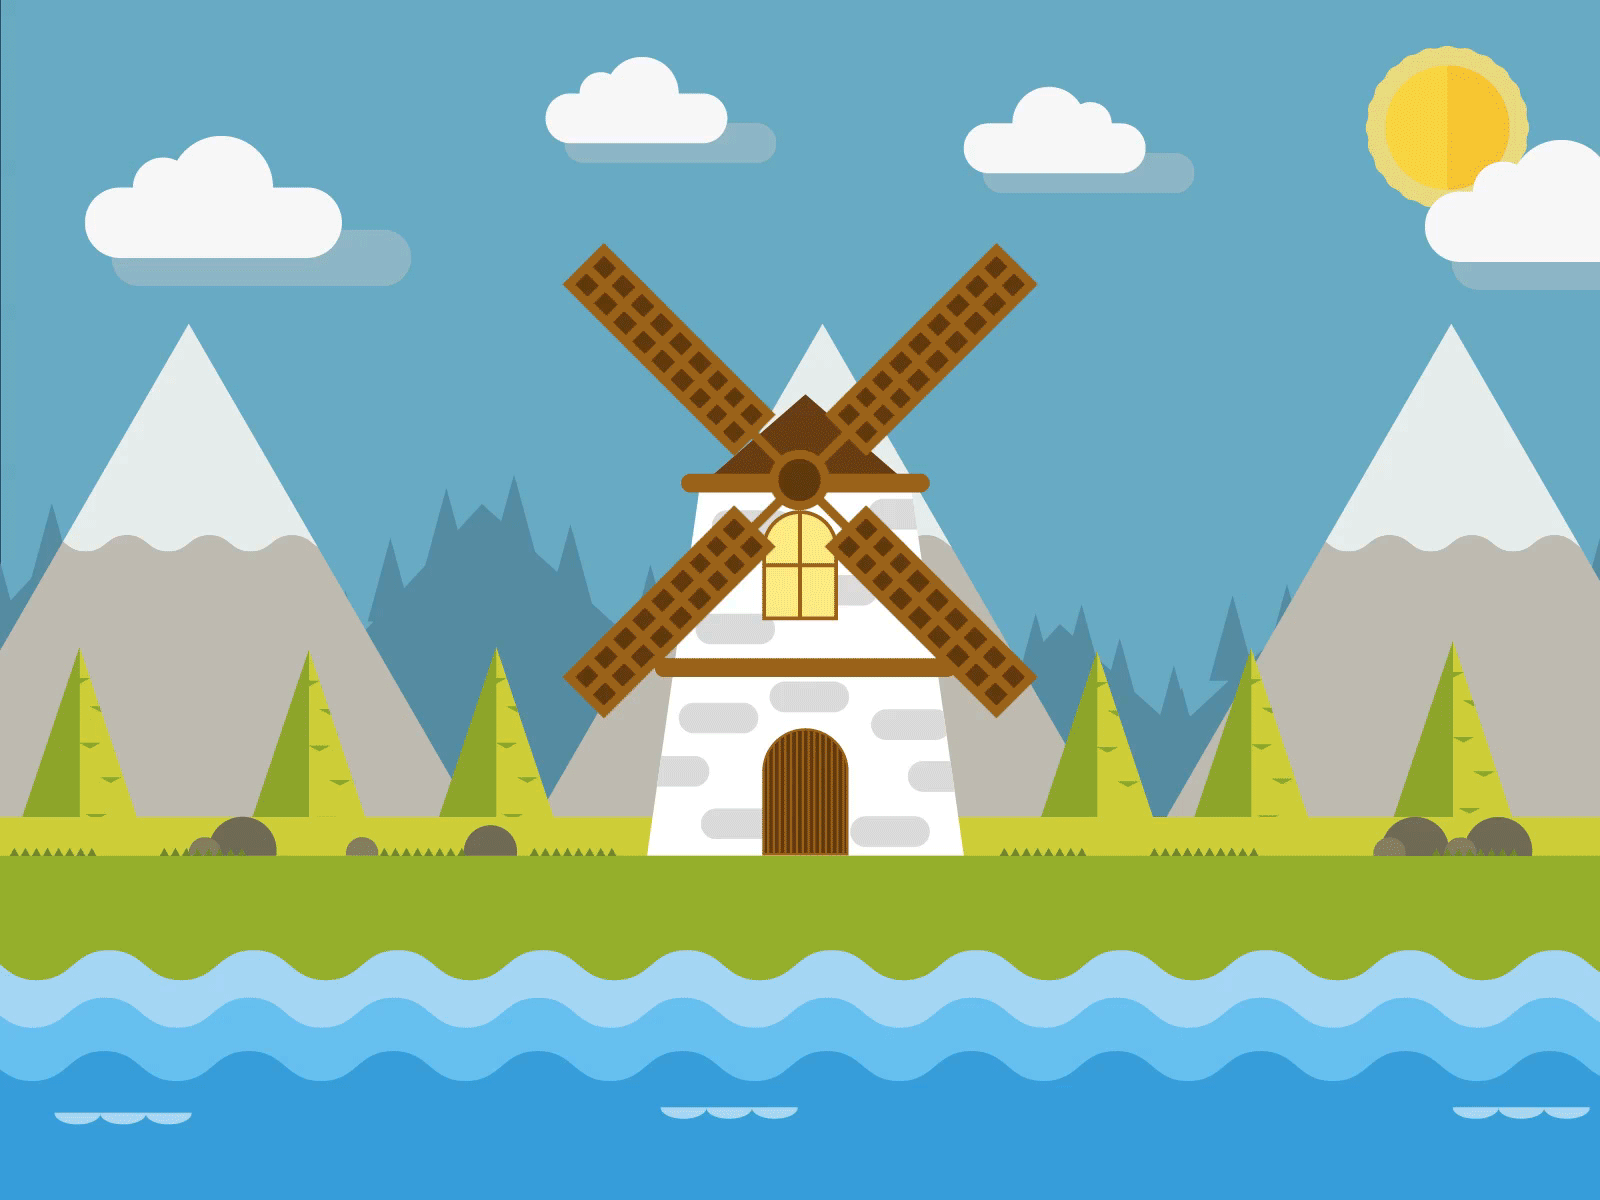 Molino 2 /Windmill 2